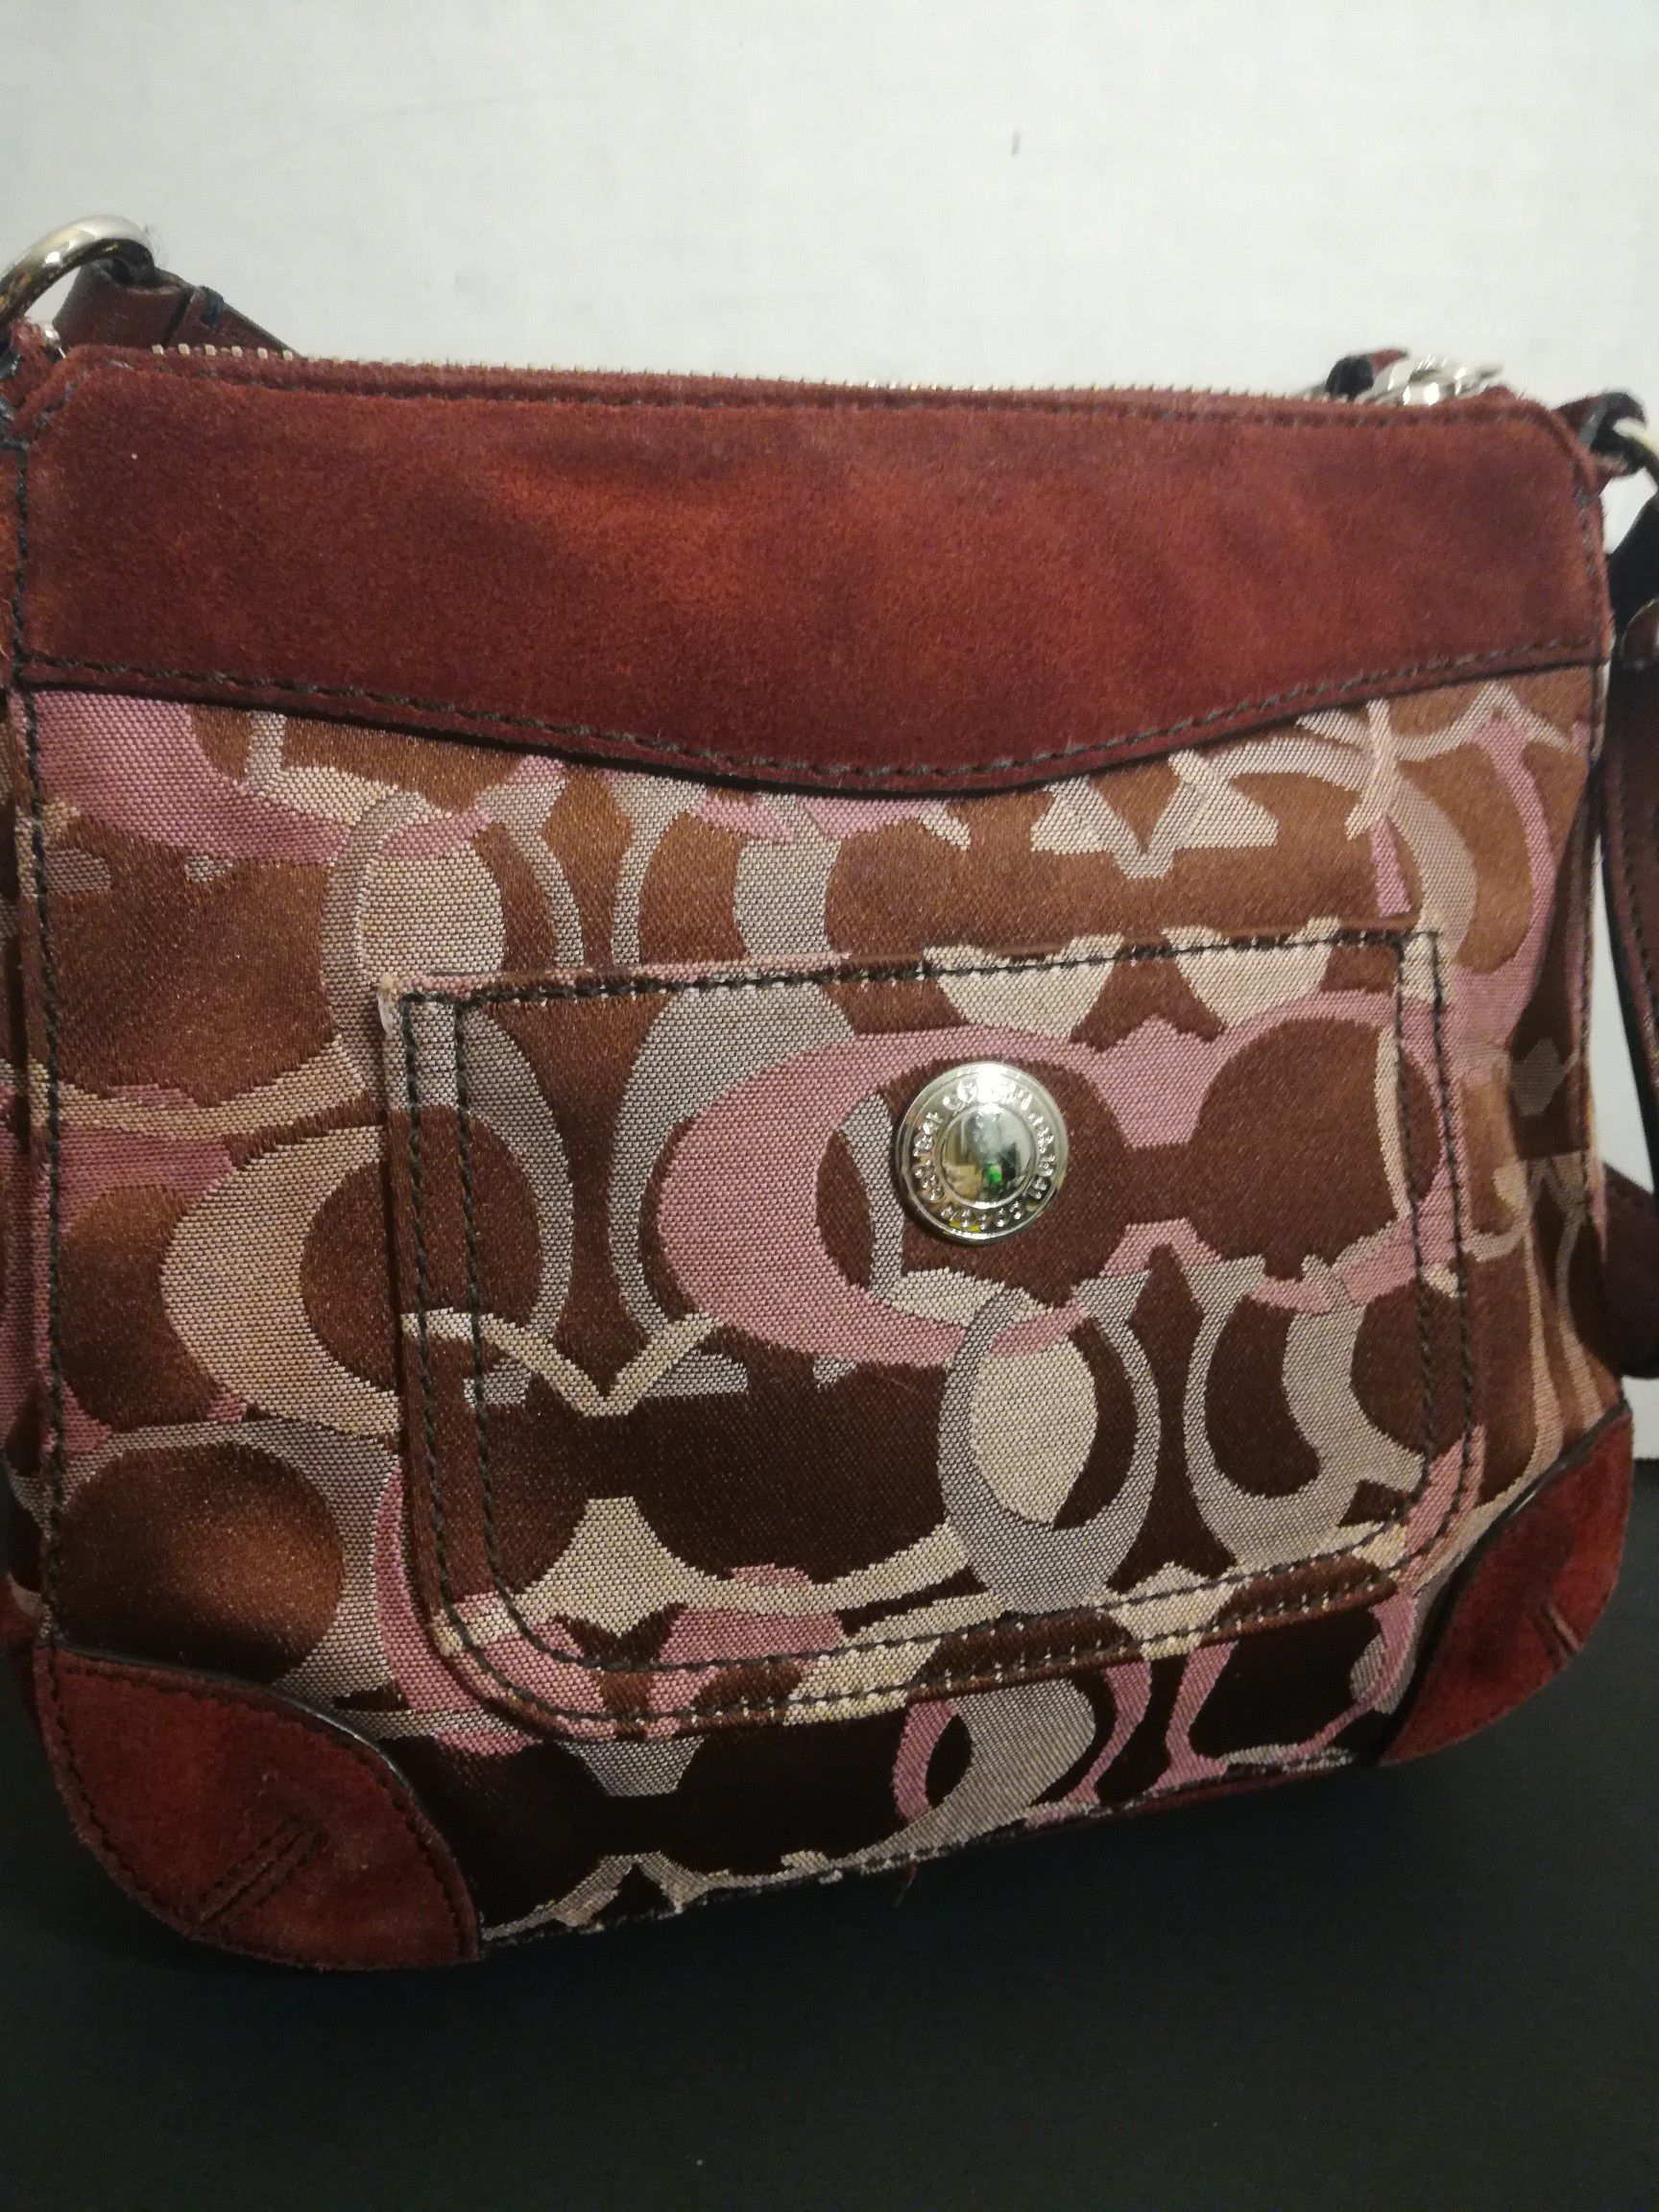 Small coach handbag